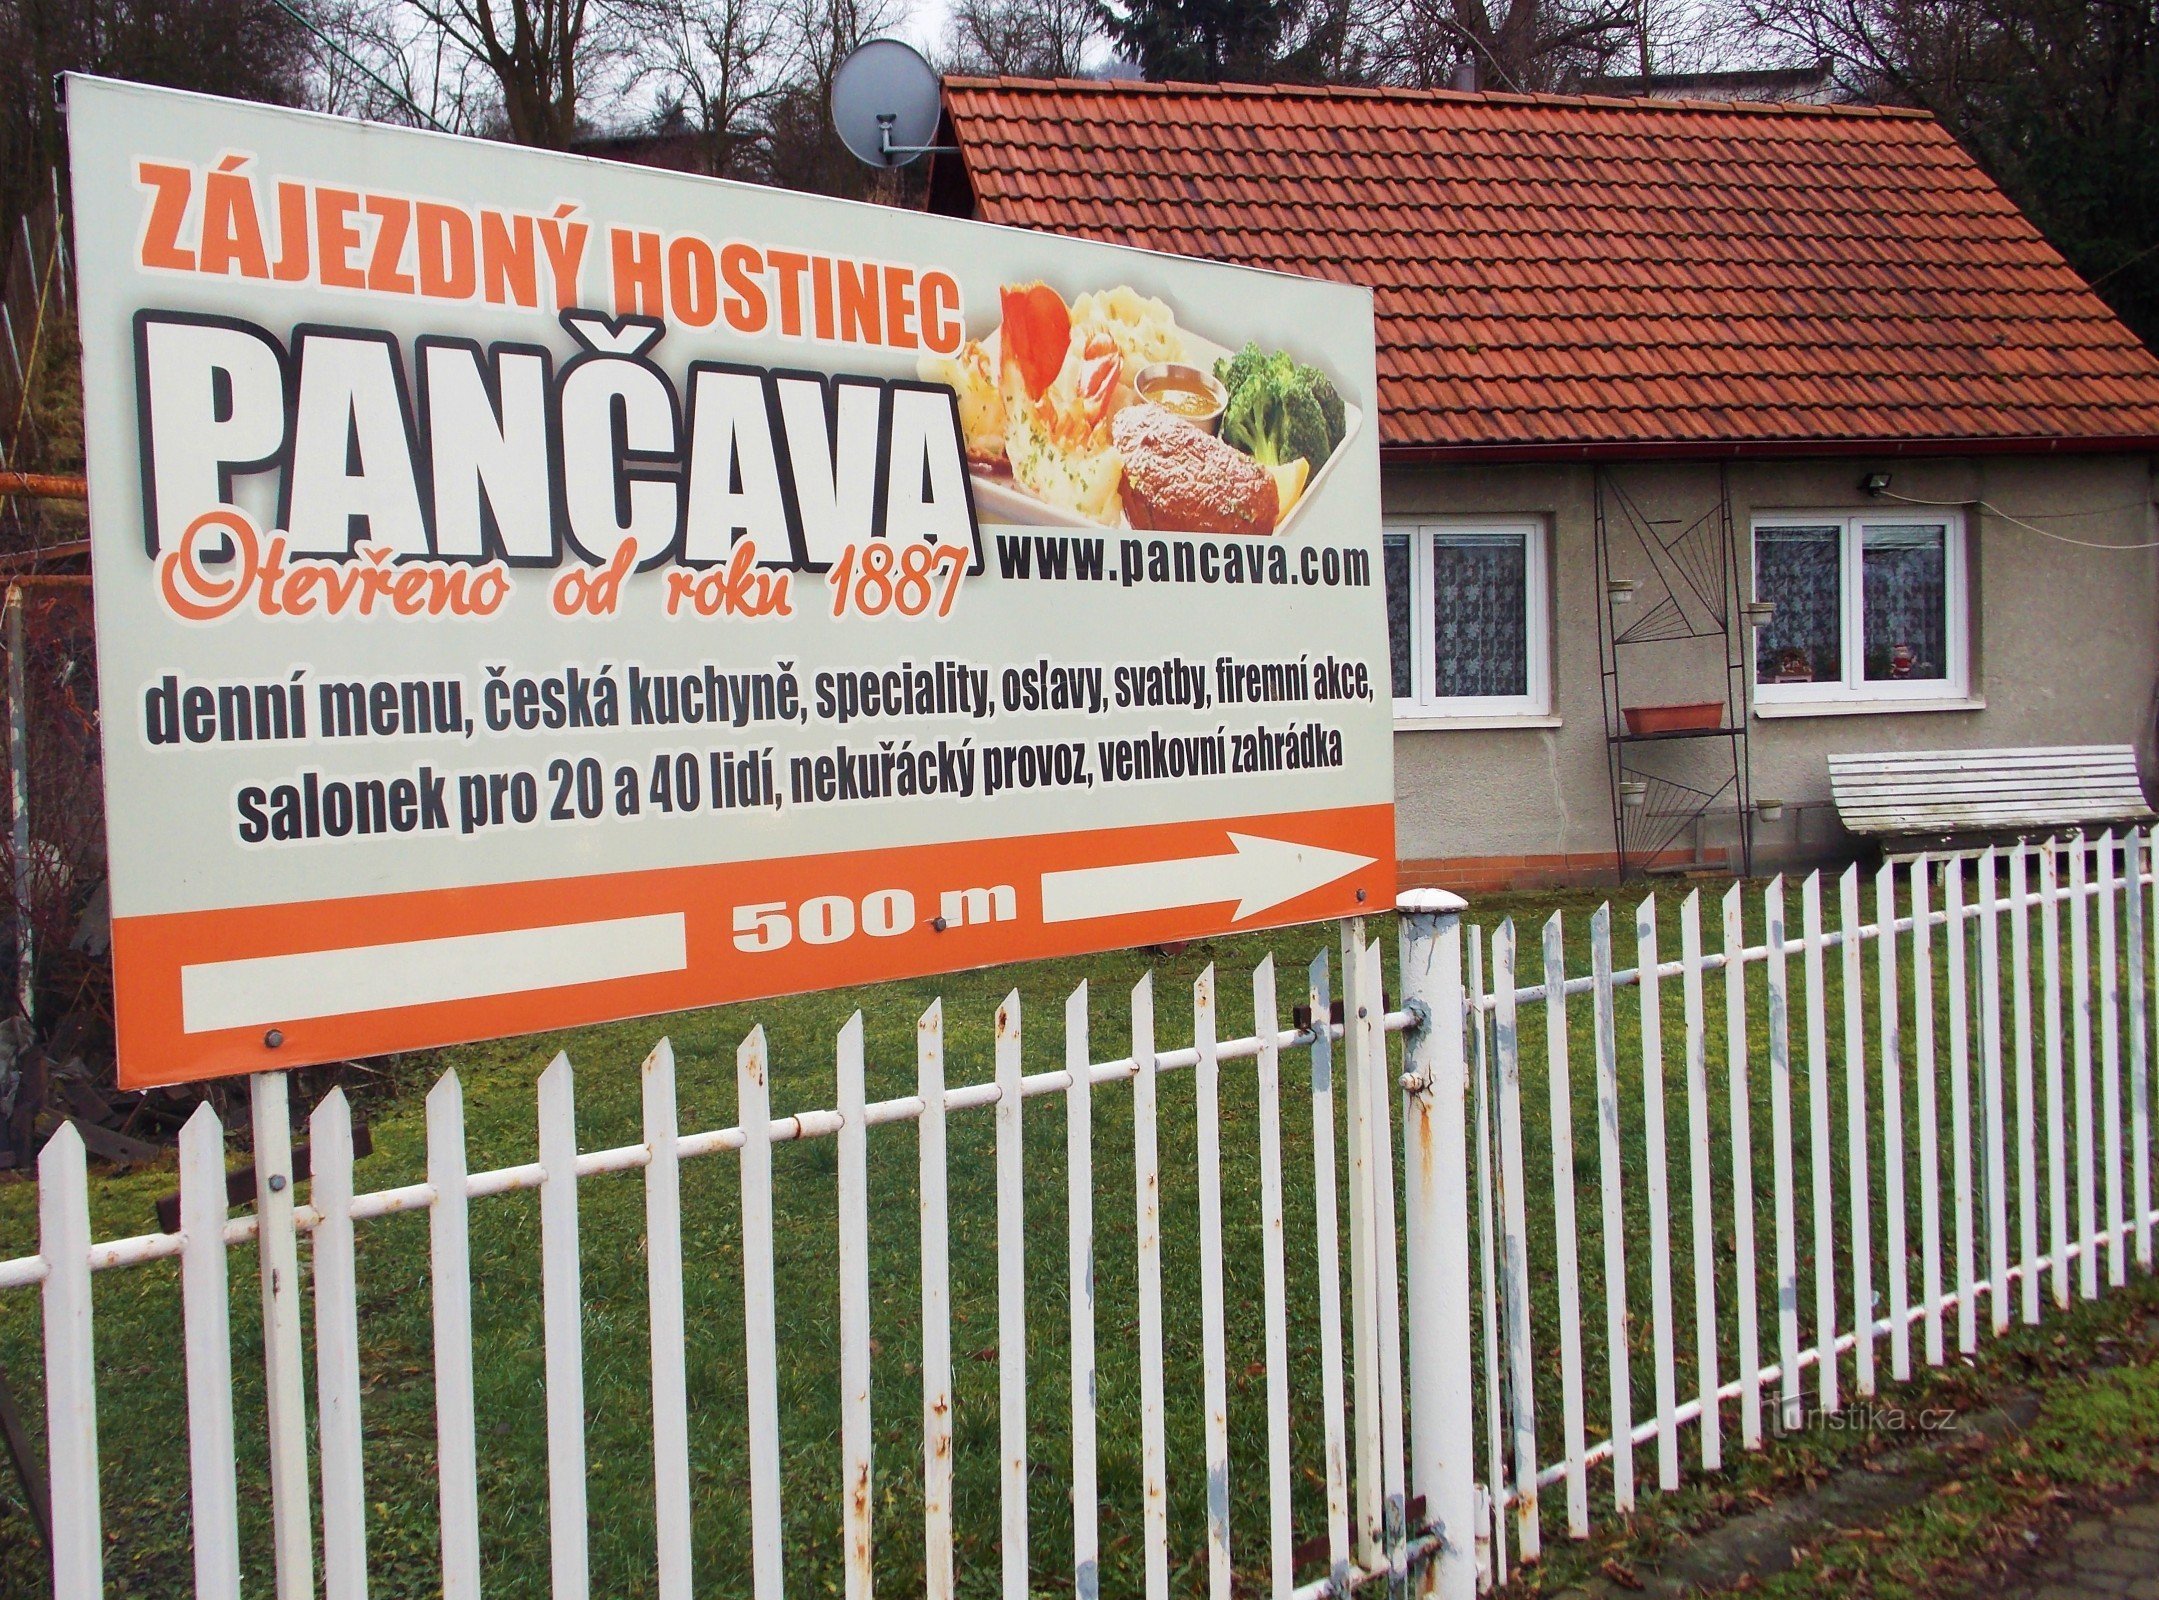 Ravintola Pančava Zlíniin